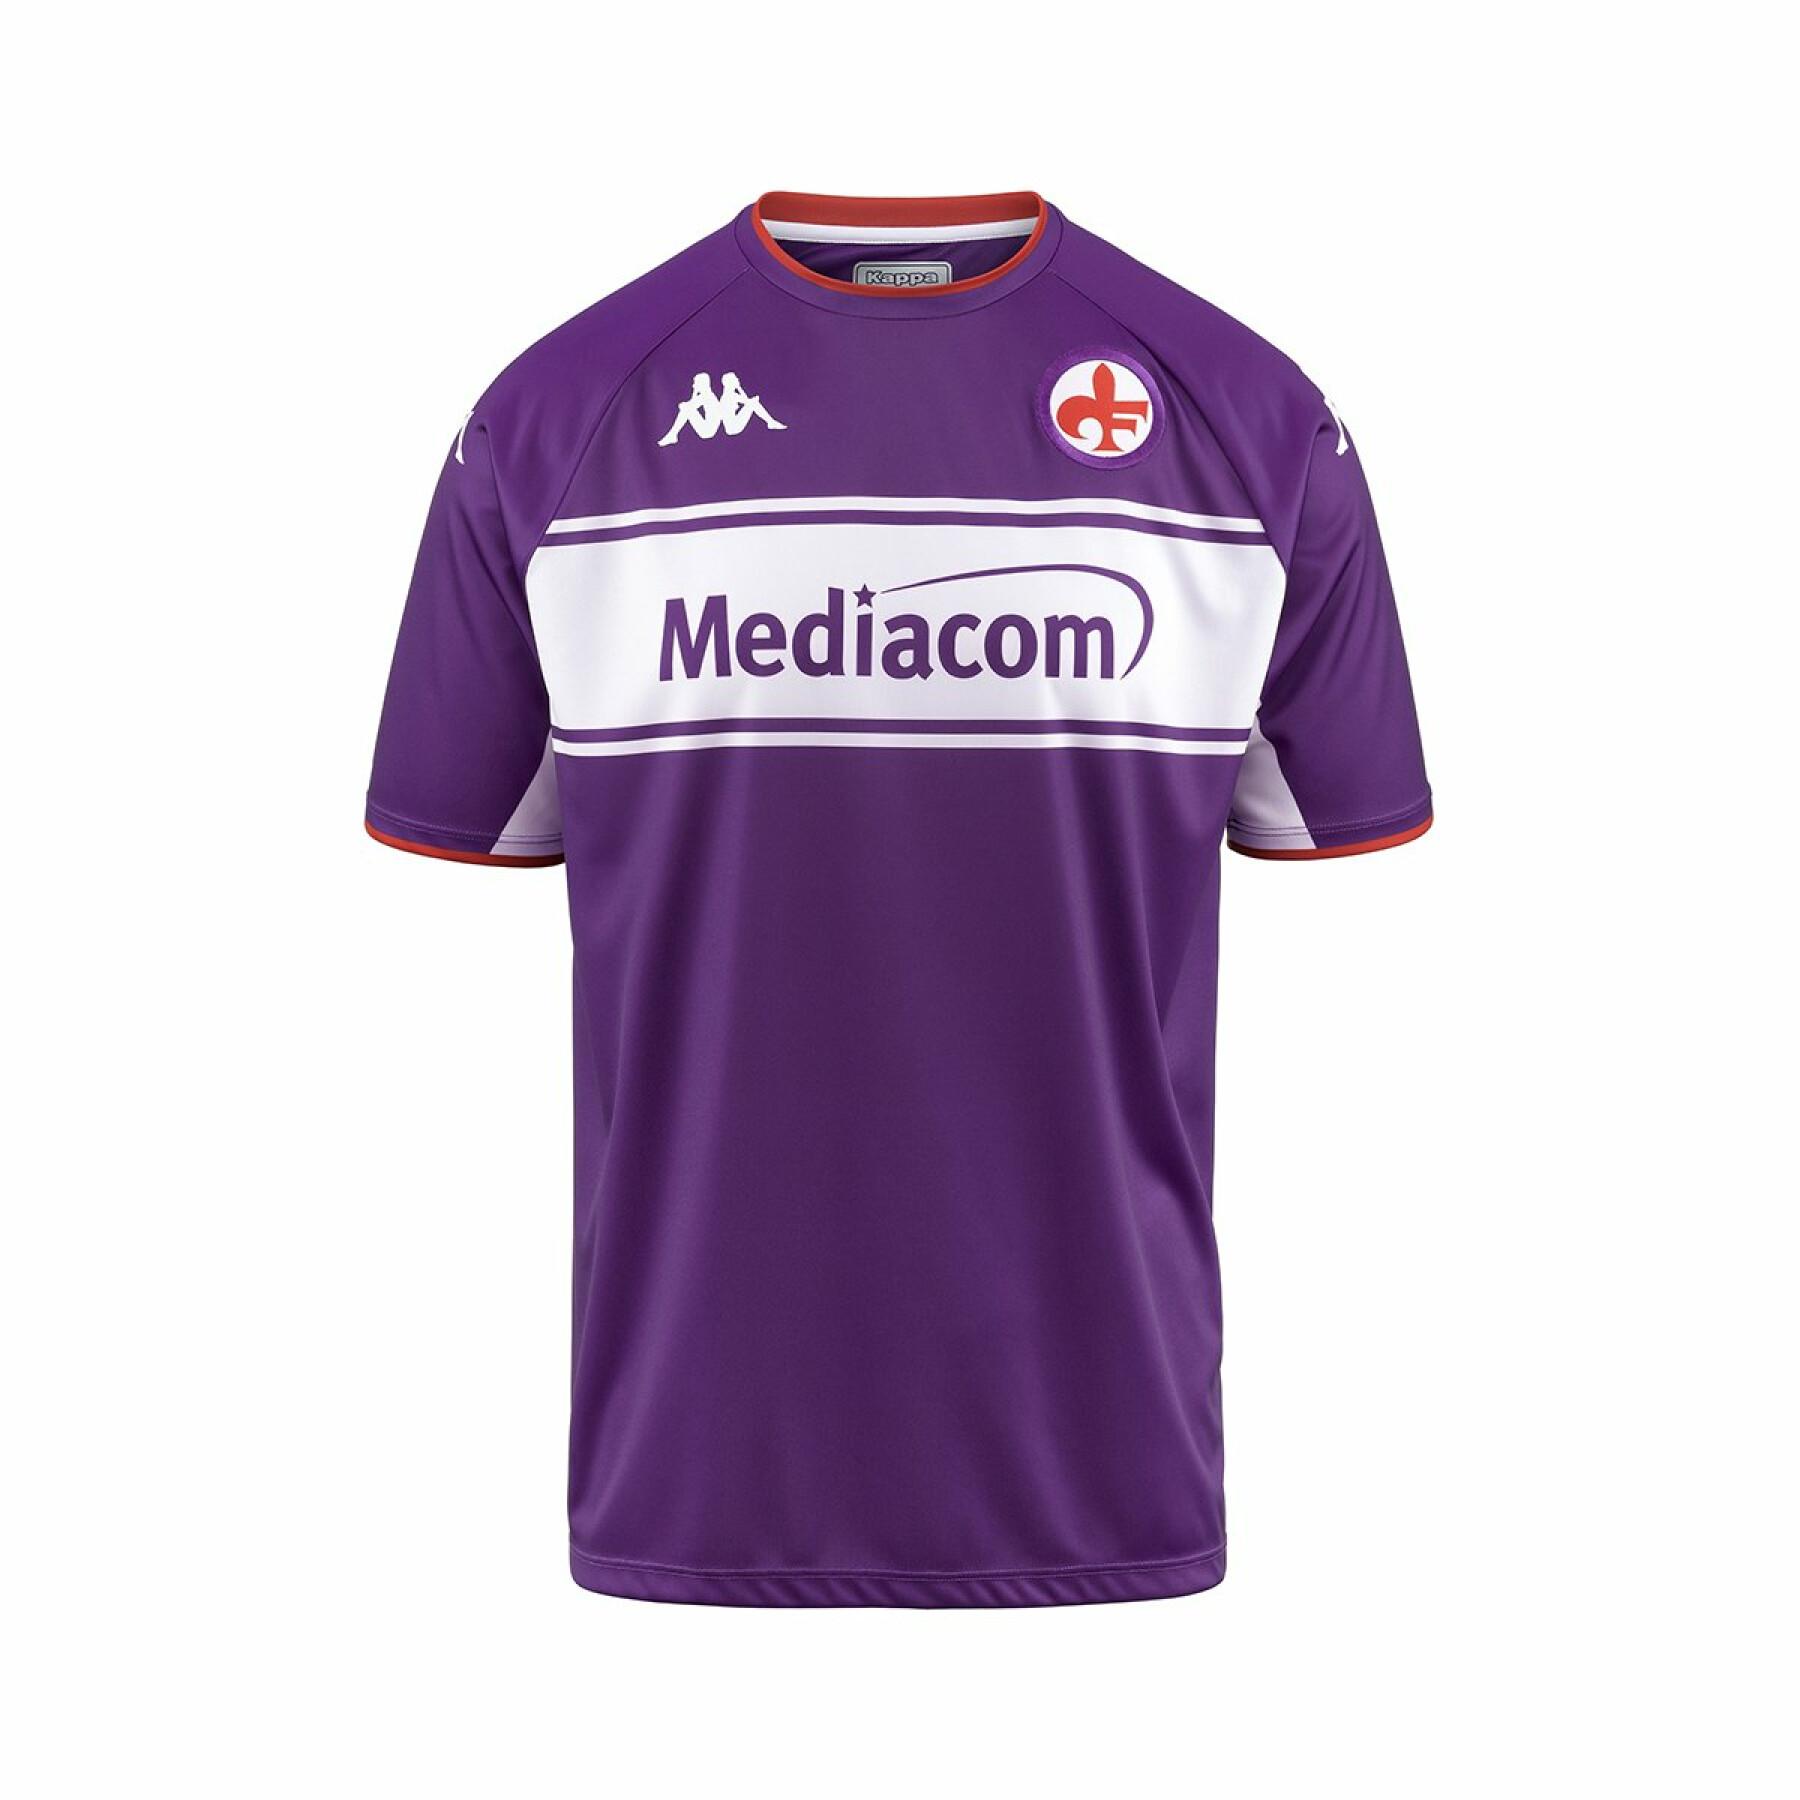 Home jersey Fiorentina AC 2021/22